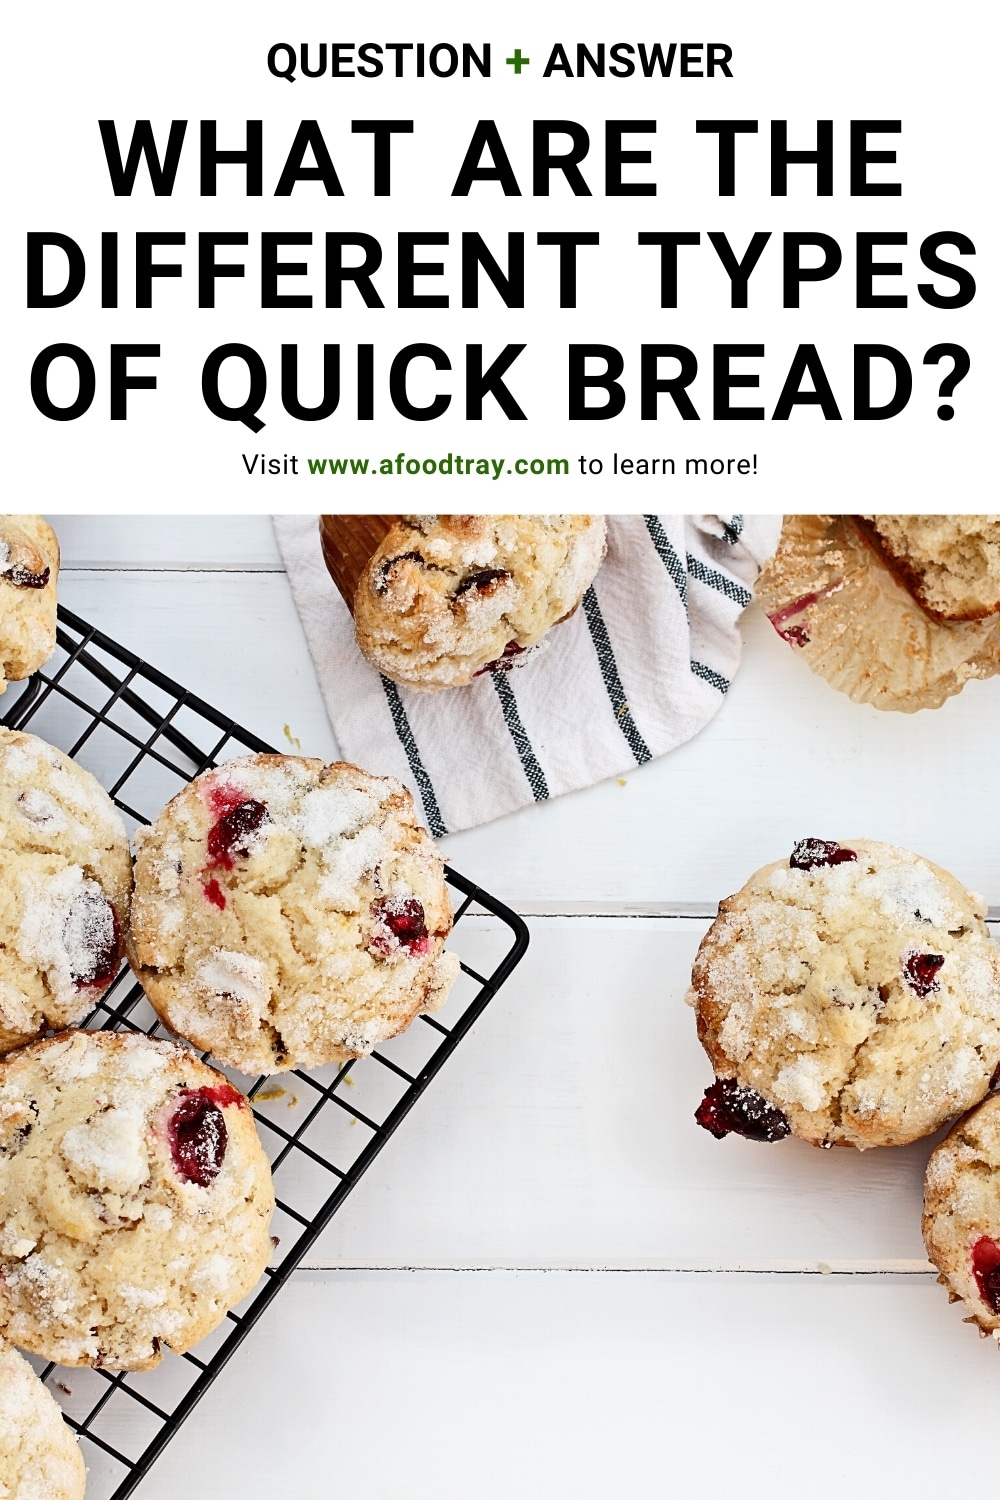 common types of quiick breads